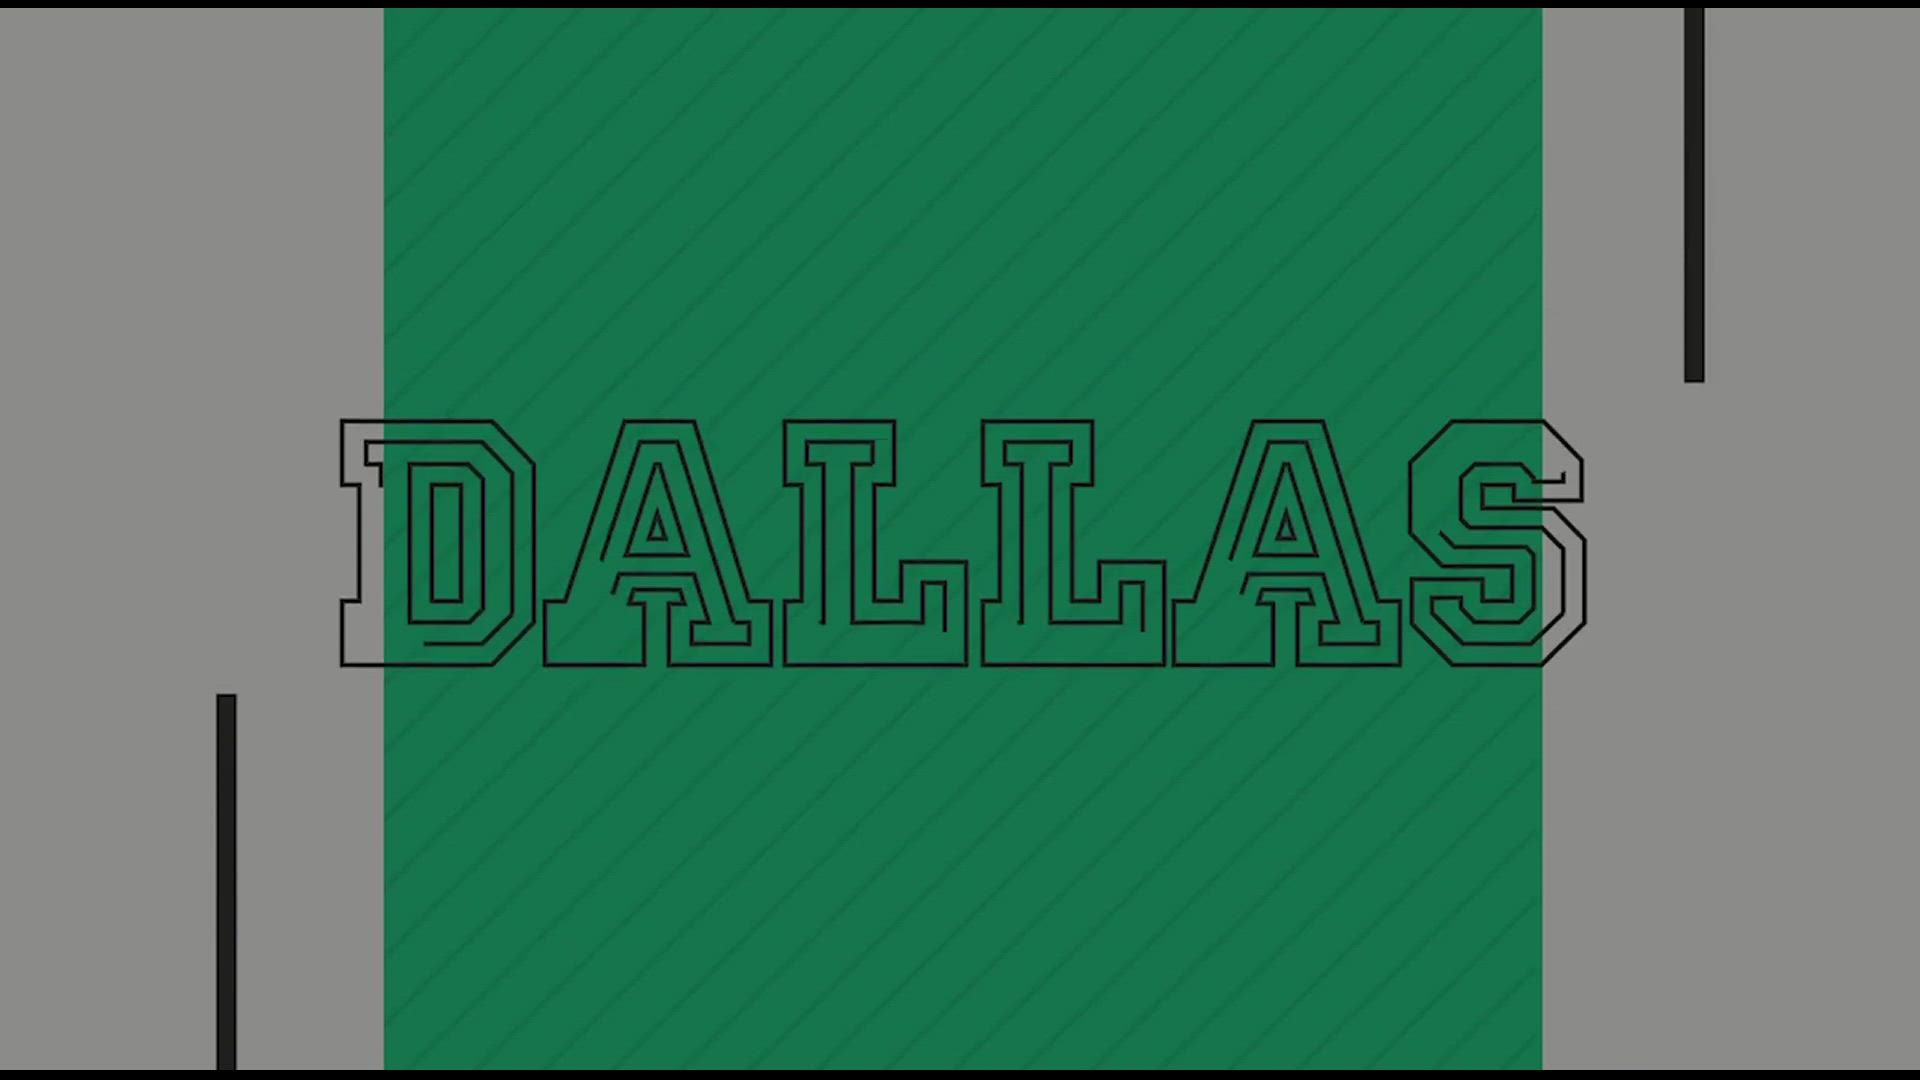 Reaction to Dallas Stars' neon alternate “blackout” uniforms